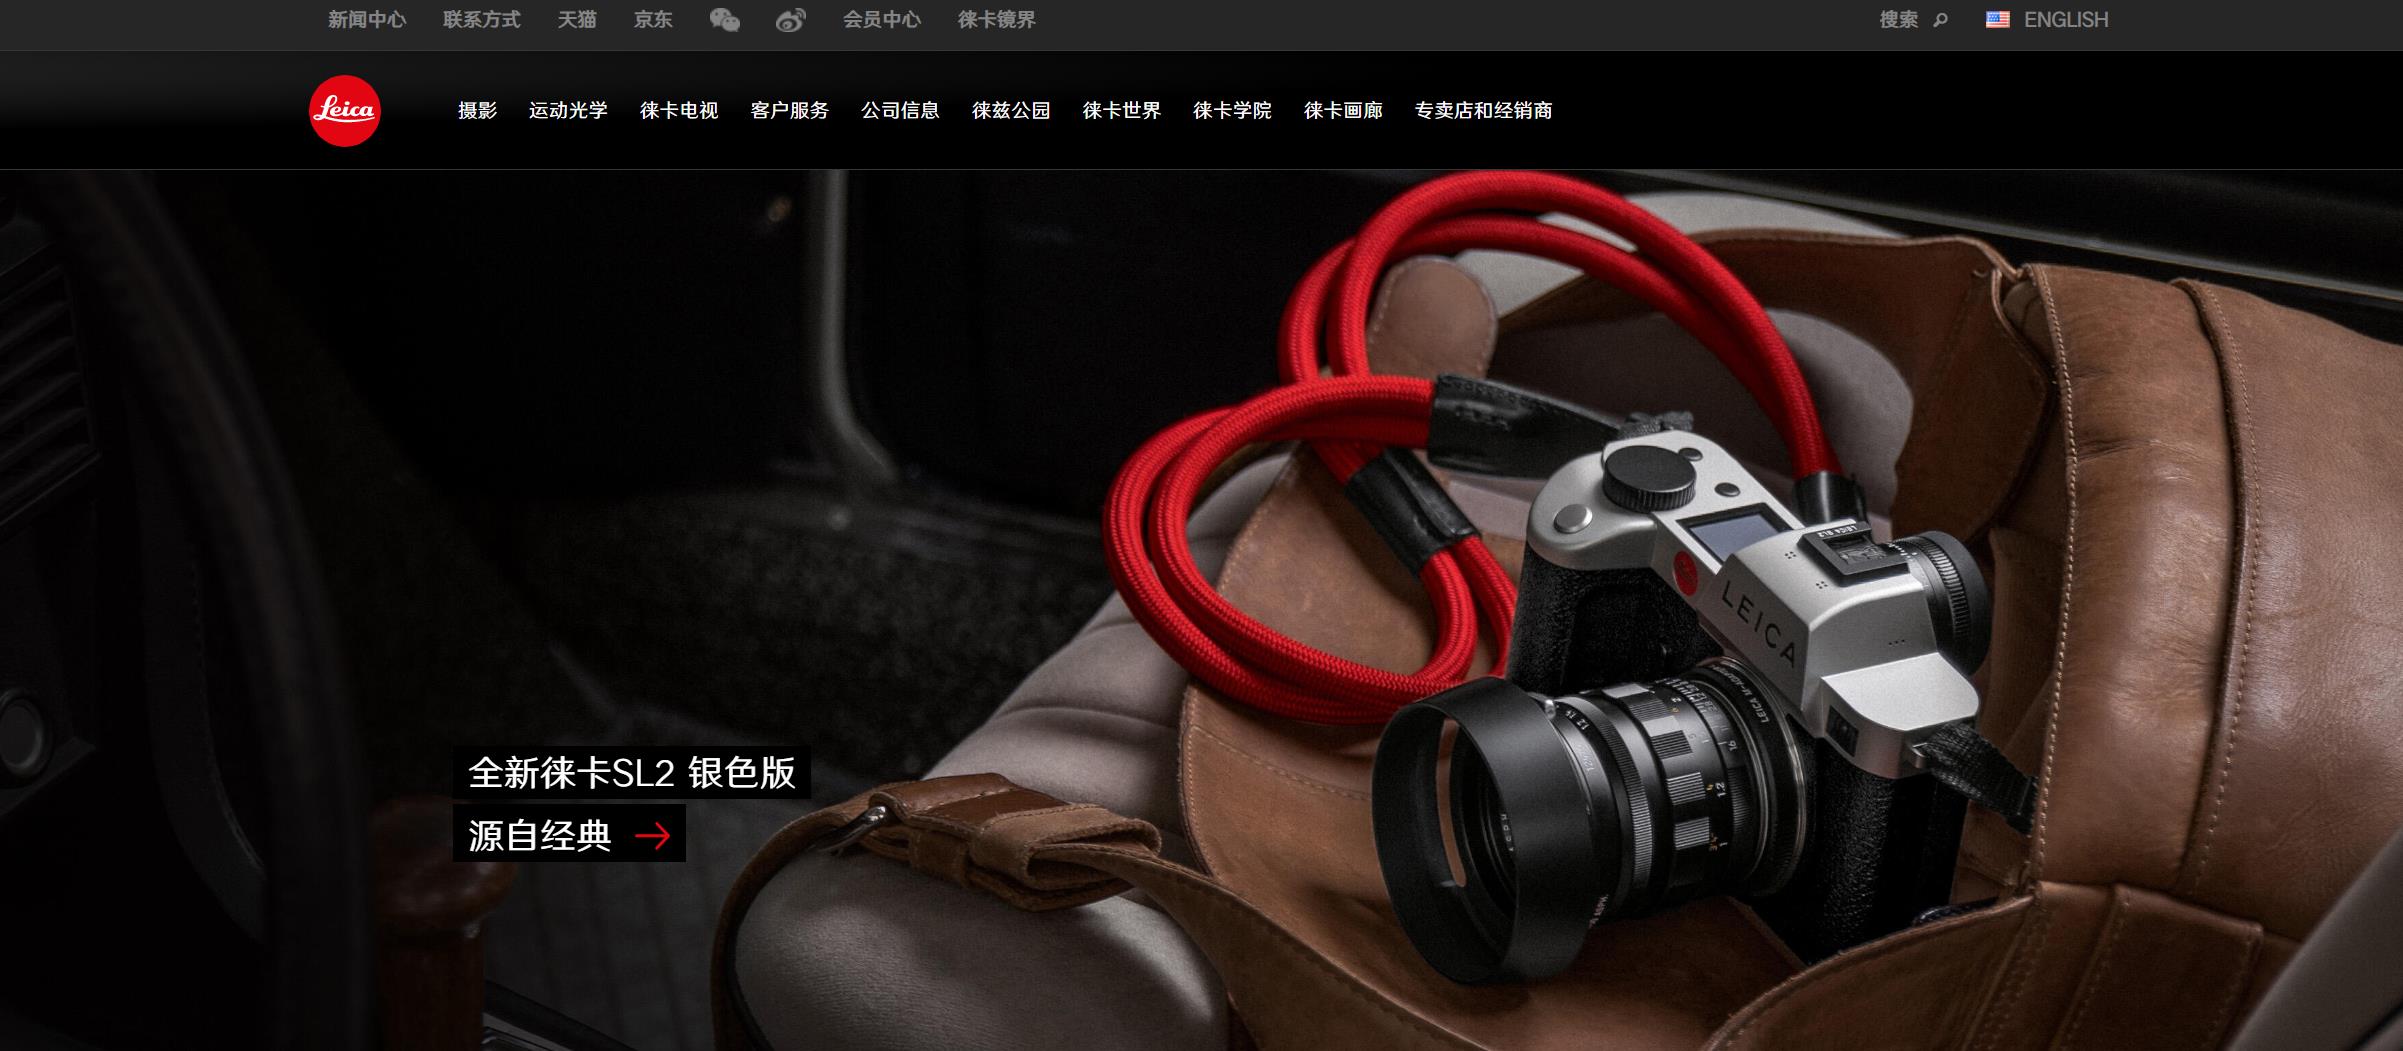 Leica徕卡相机官网